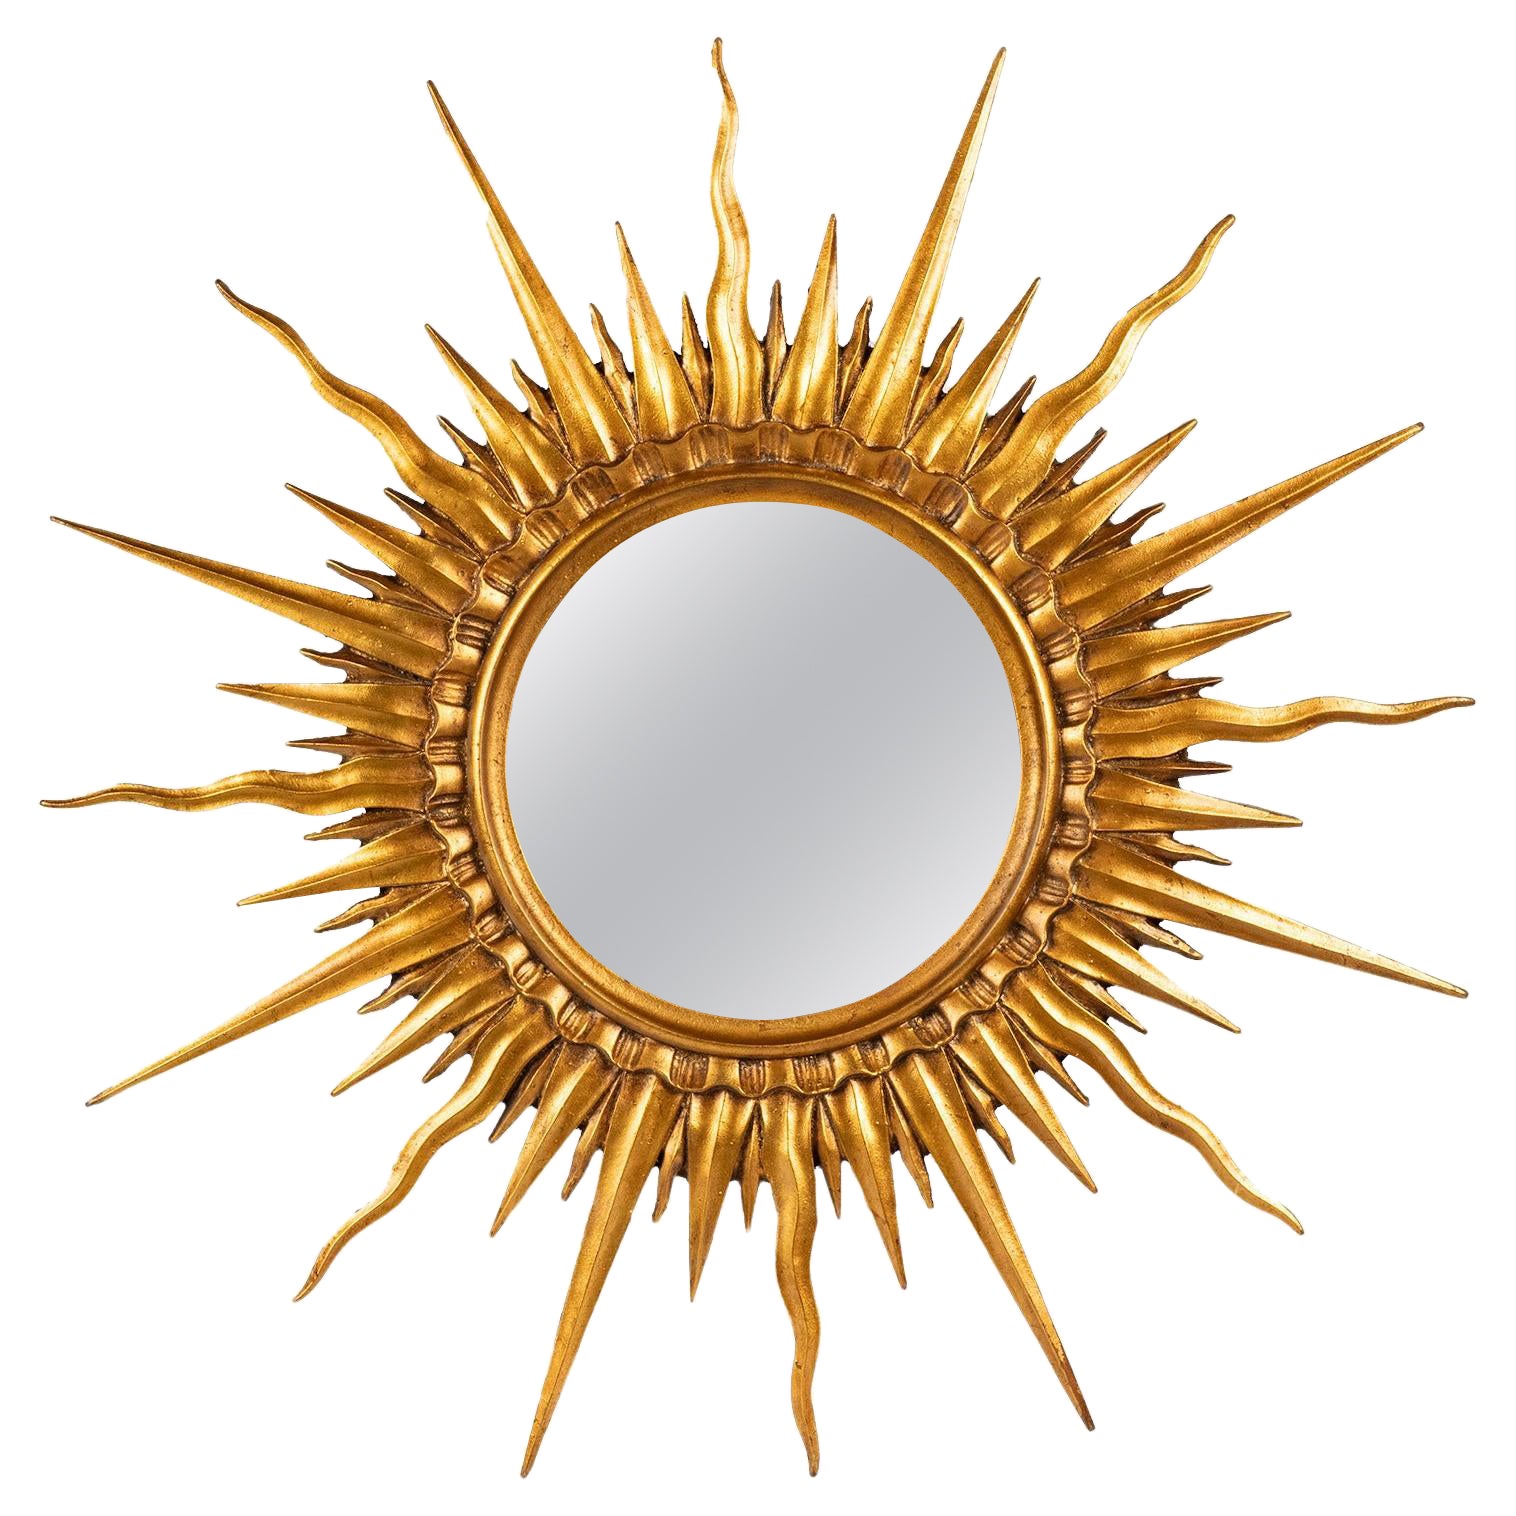 Sunburst Mirror By Mario Buatta For Famed Picture Enterprise For Sale